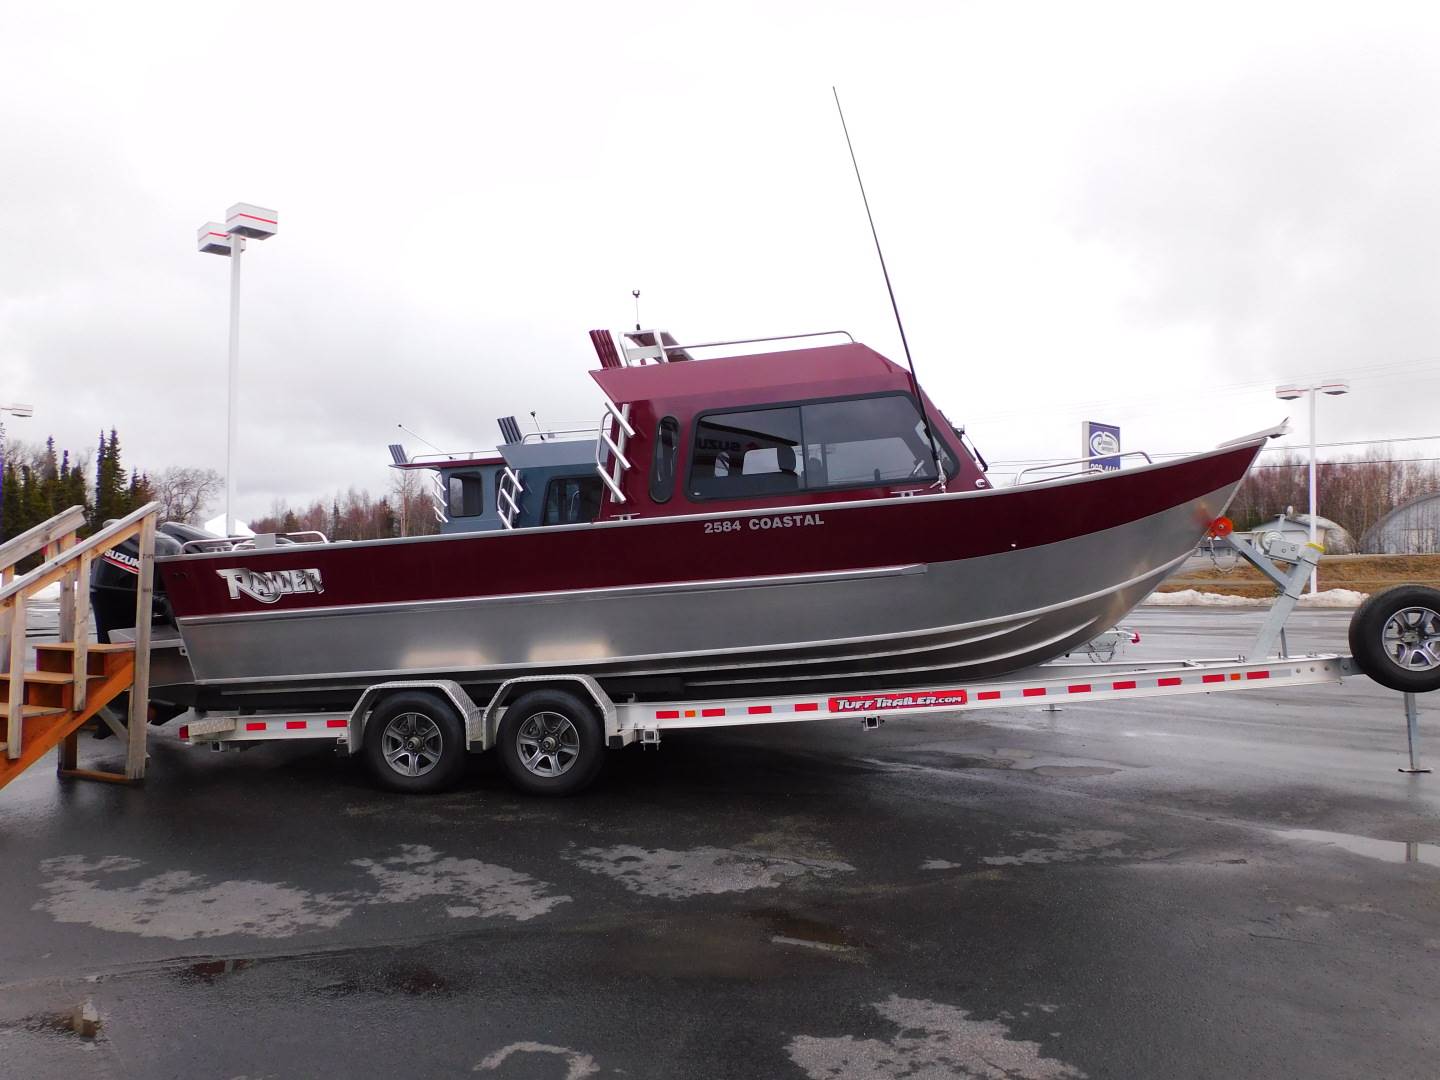 2022 Raider Boats 2584 Coastal  "SOLD" in Soldotna, Alaska - Photo 2